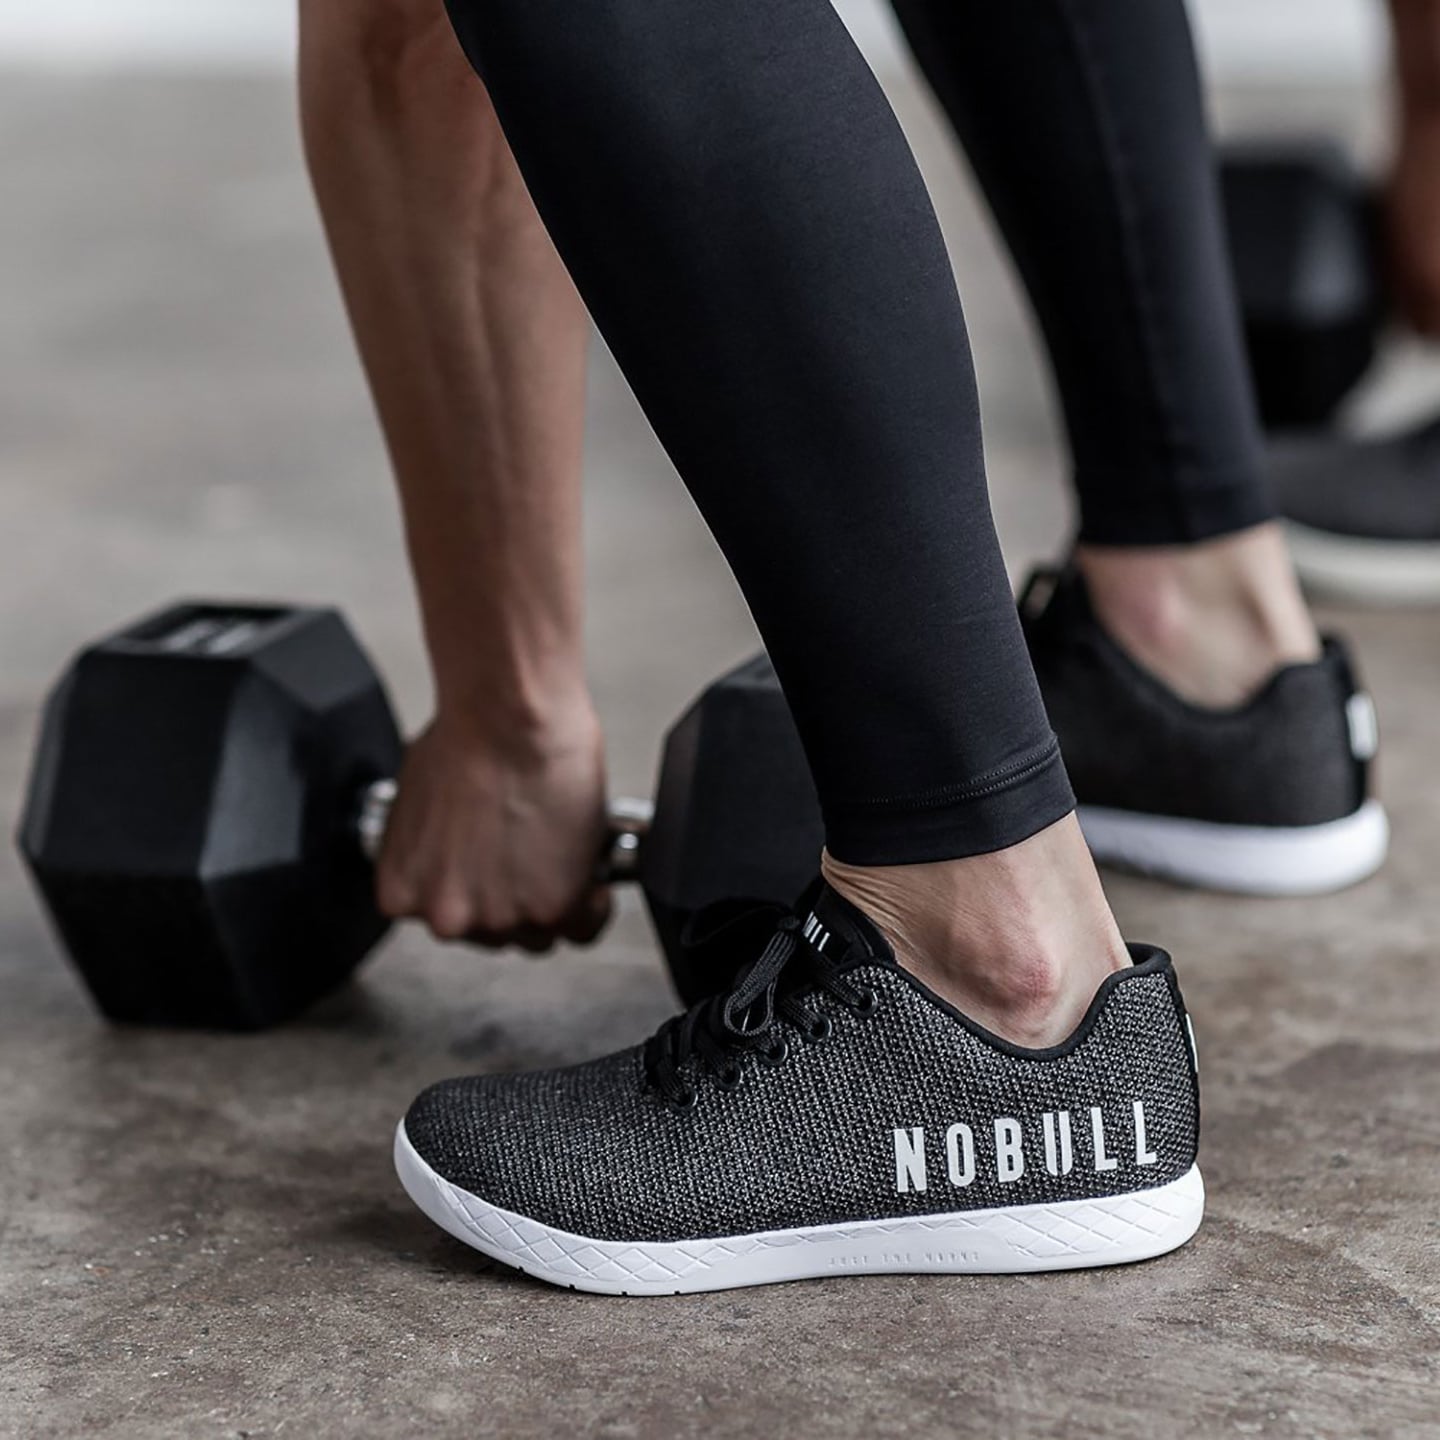 nobull trainers for running